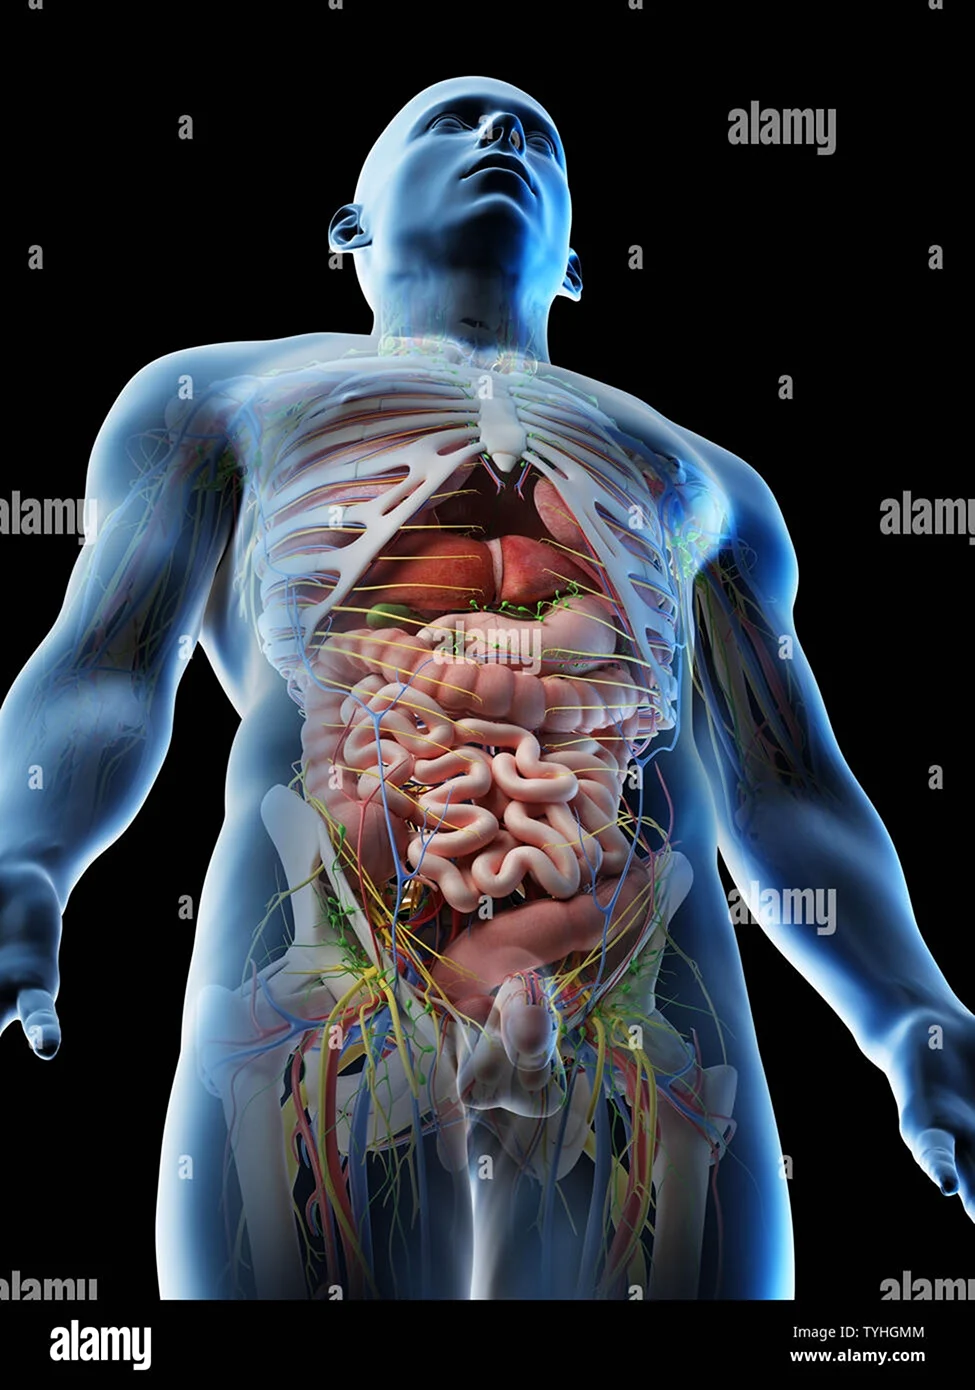 Анатомия мужчины. Тело человека органы. Мужчина без органа